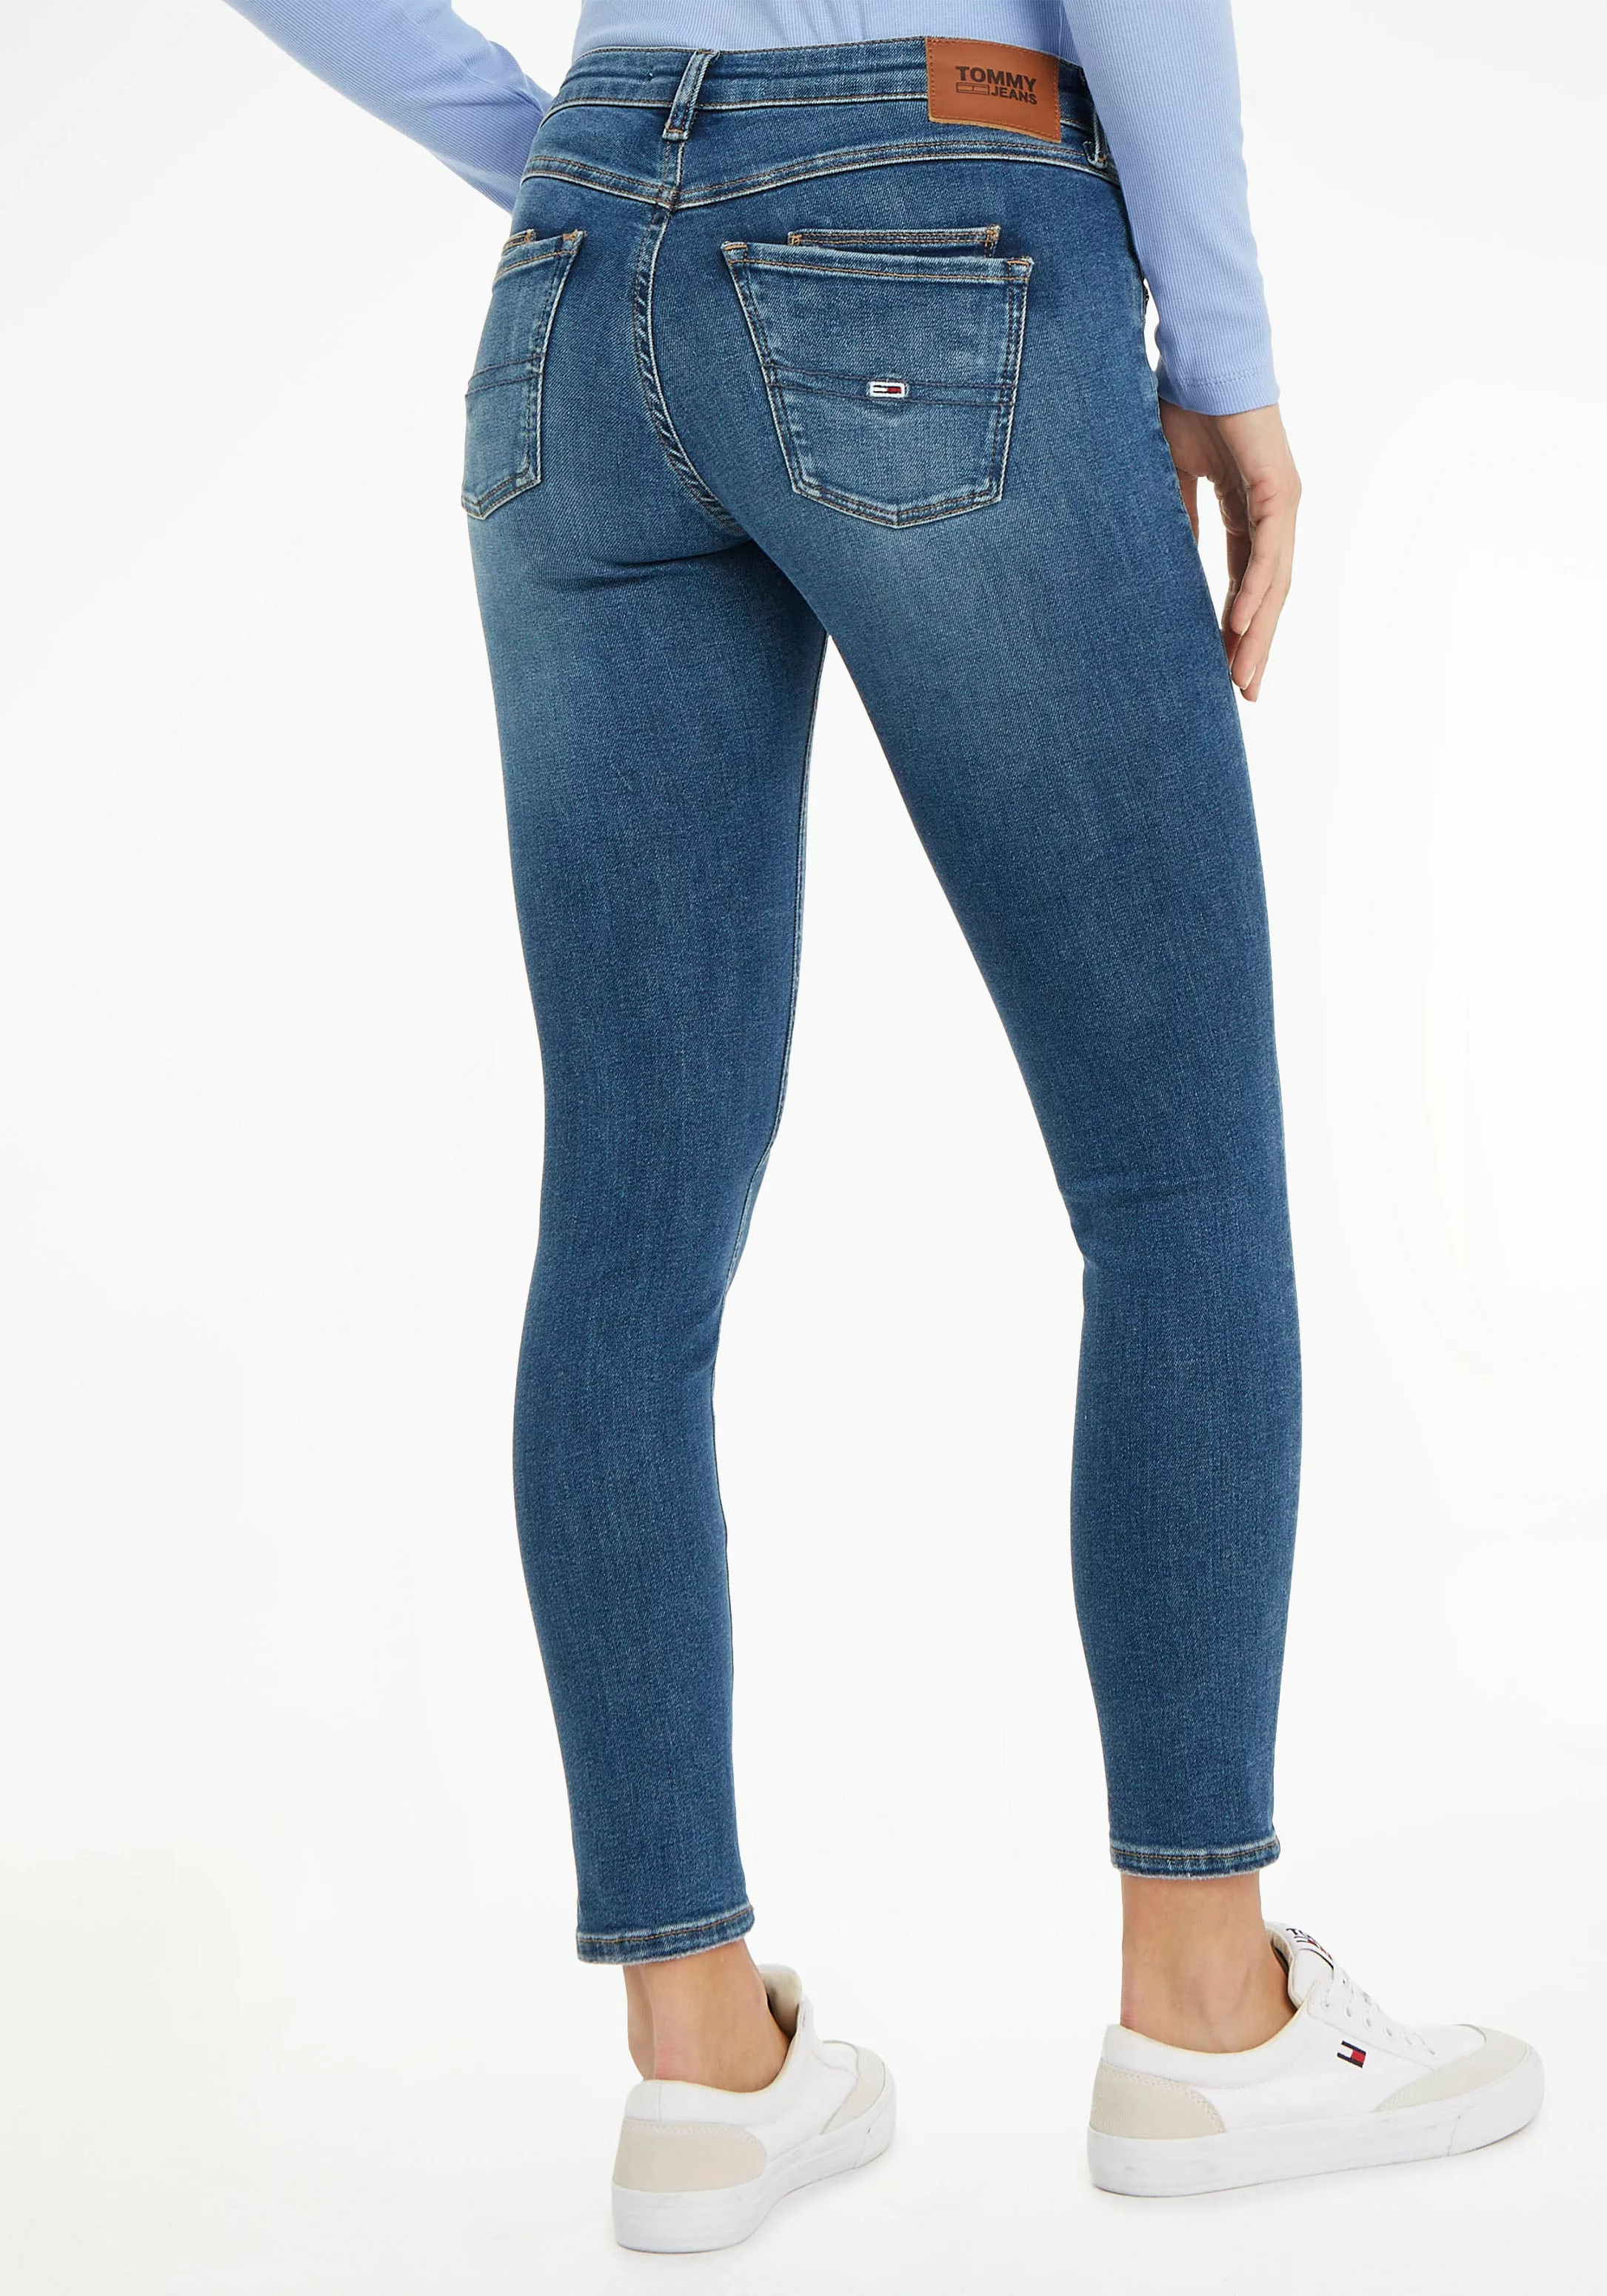 Tommy Jeans Skinny-fit-Jeans "Scarlett", mit gestickter Tommy Jeans Flag an günstig online kaufen